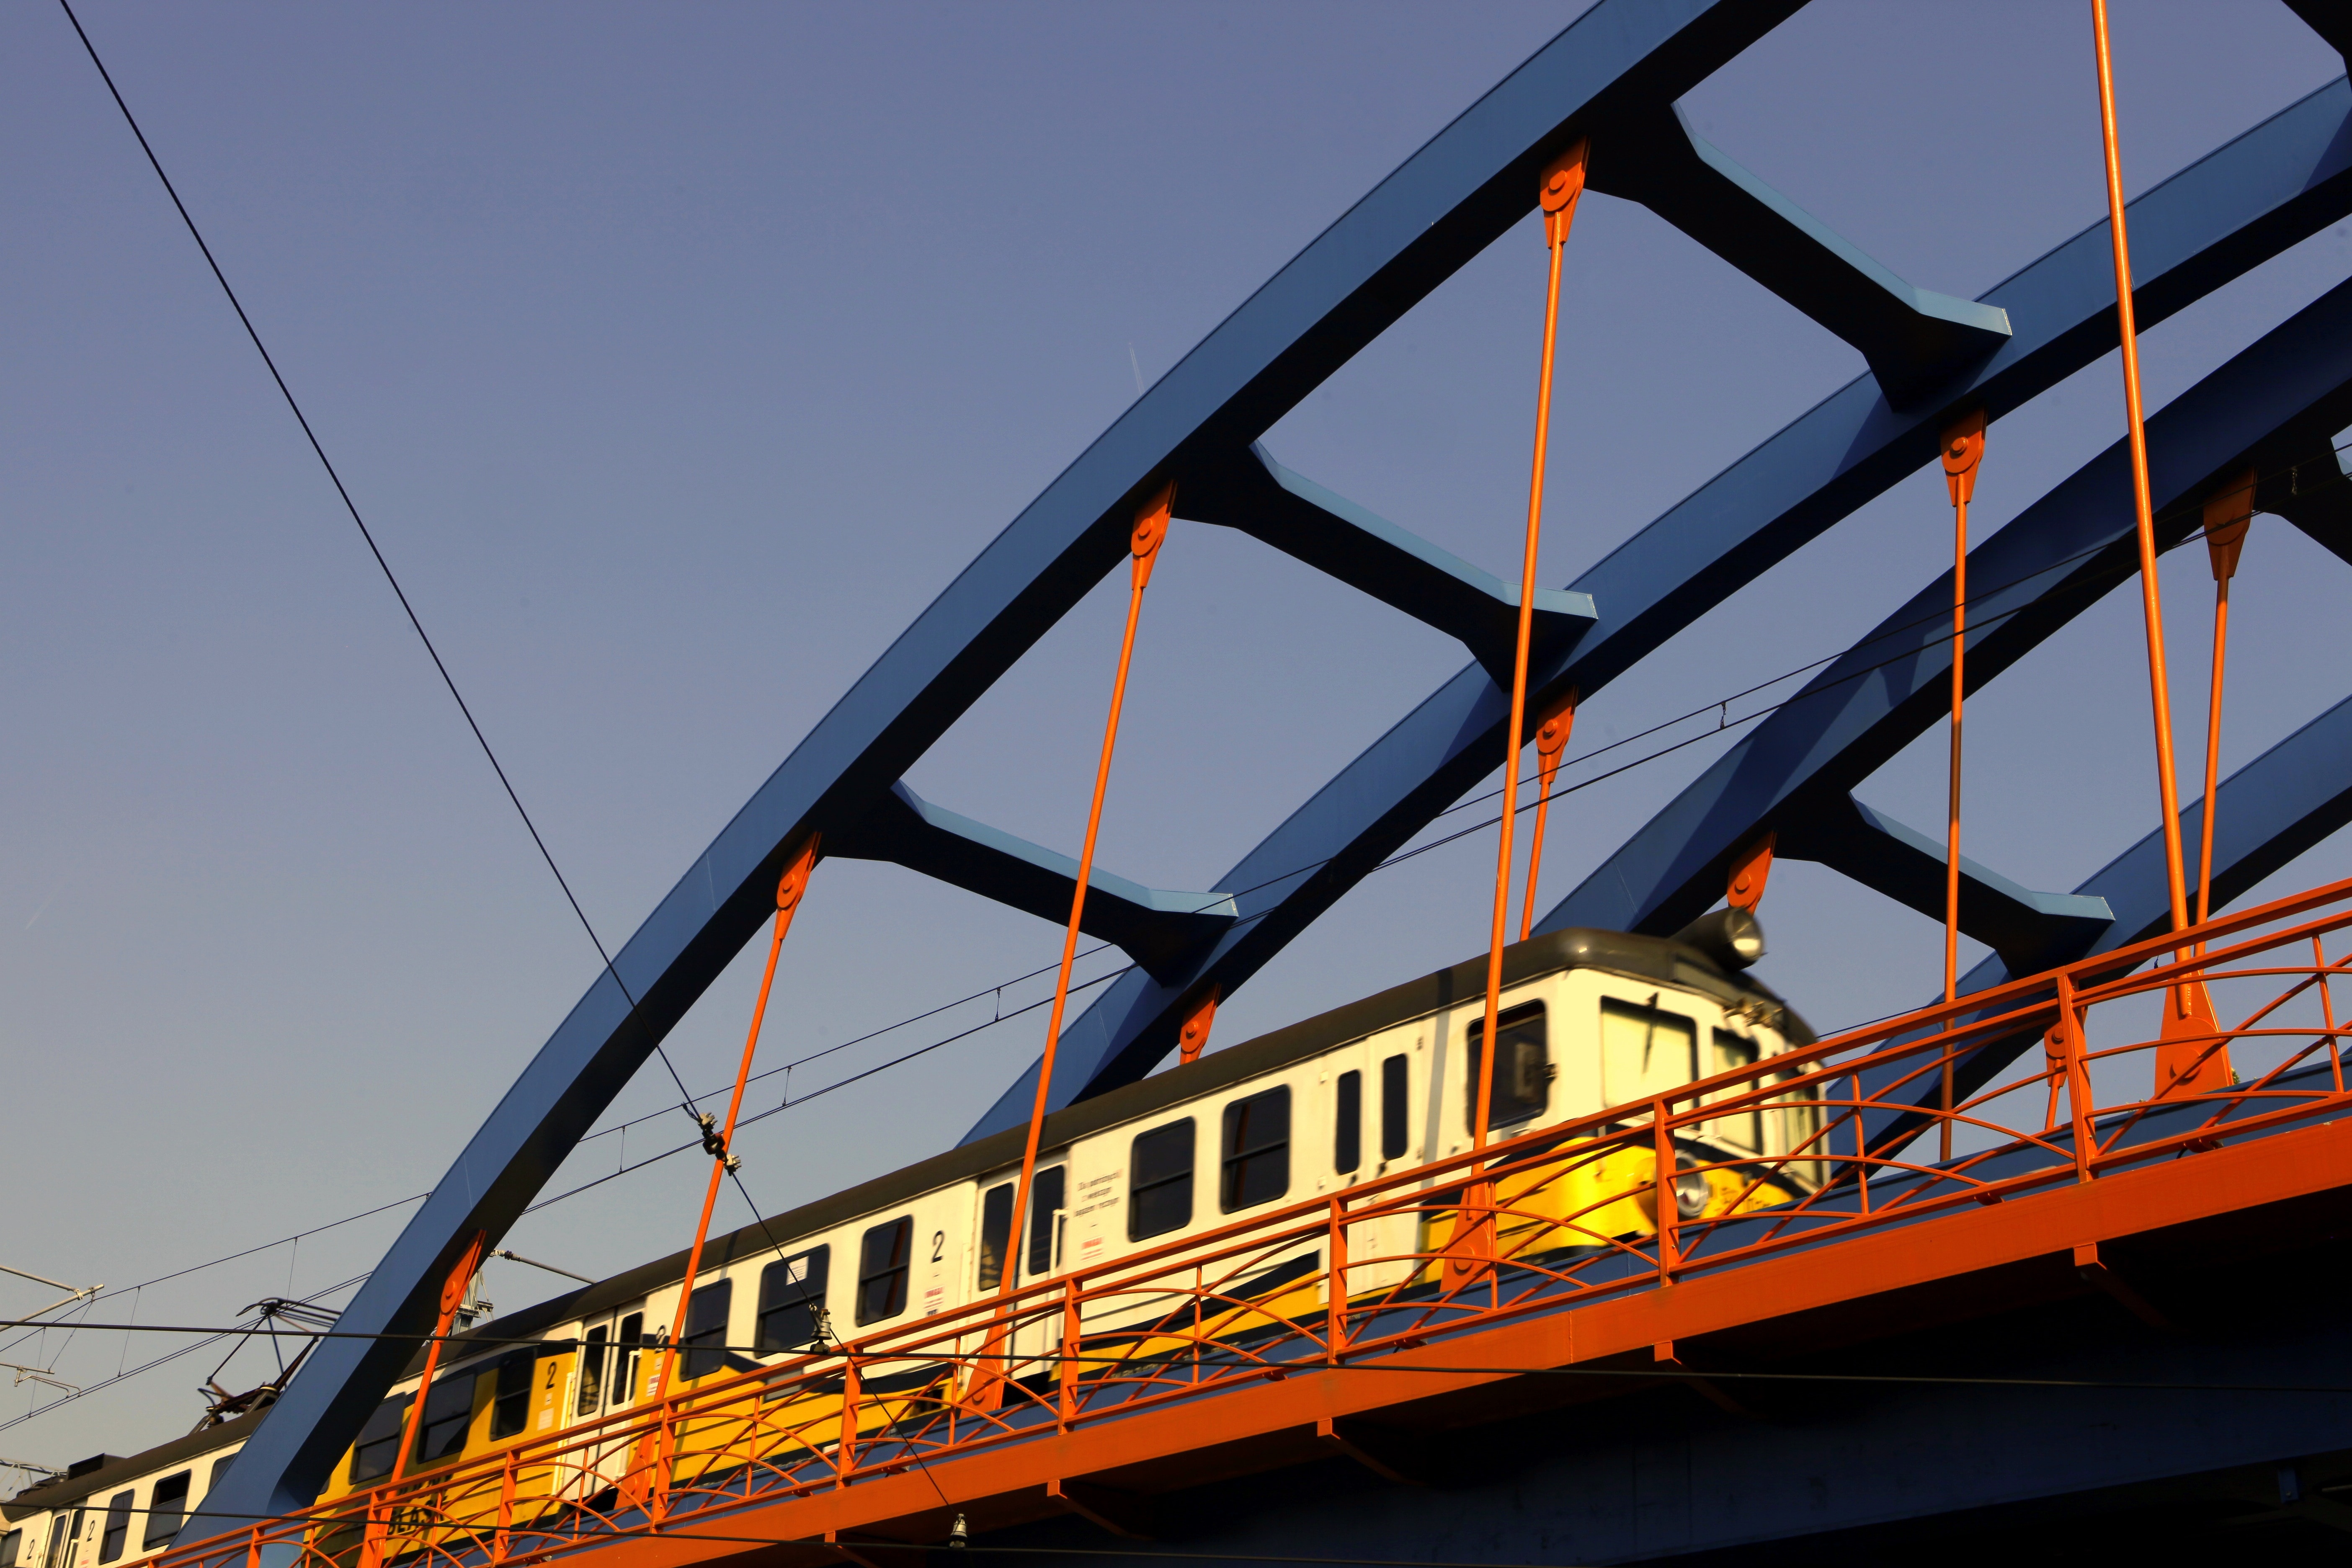 train crossing on gray metal bridge rail